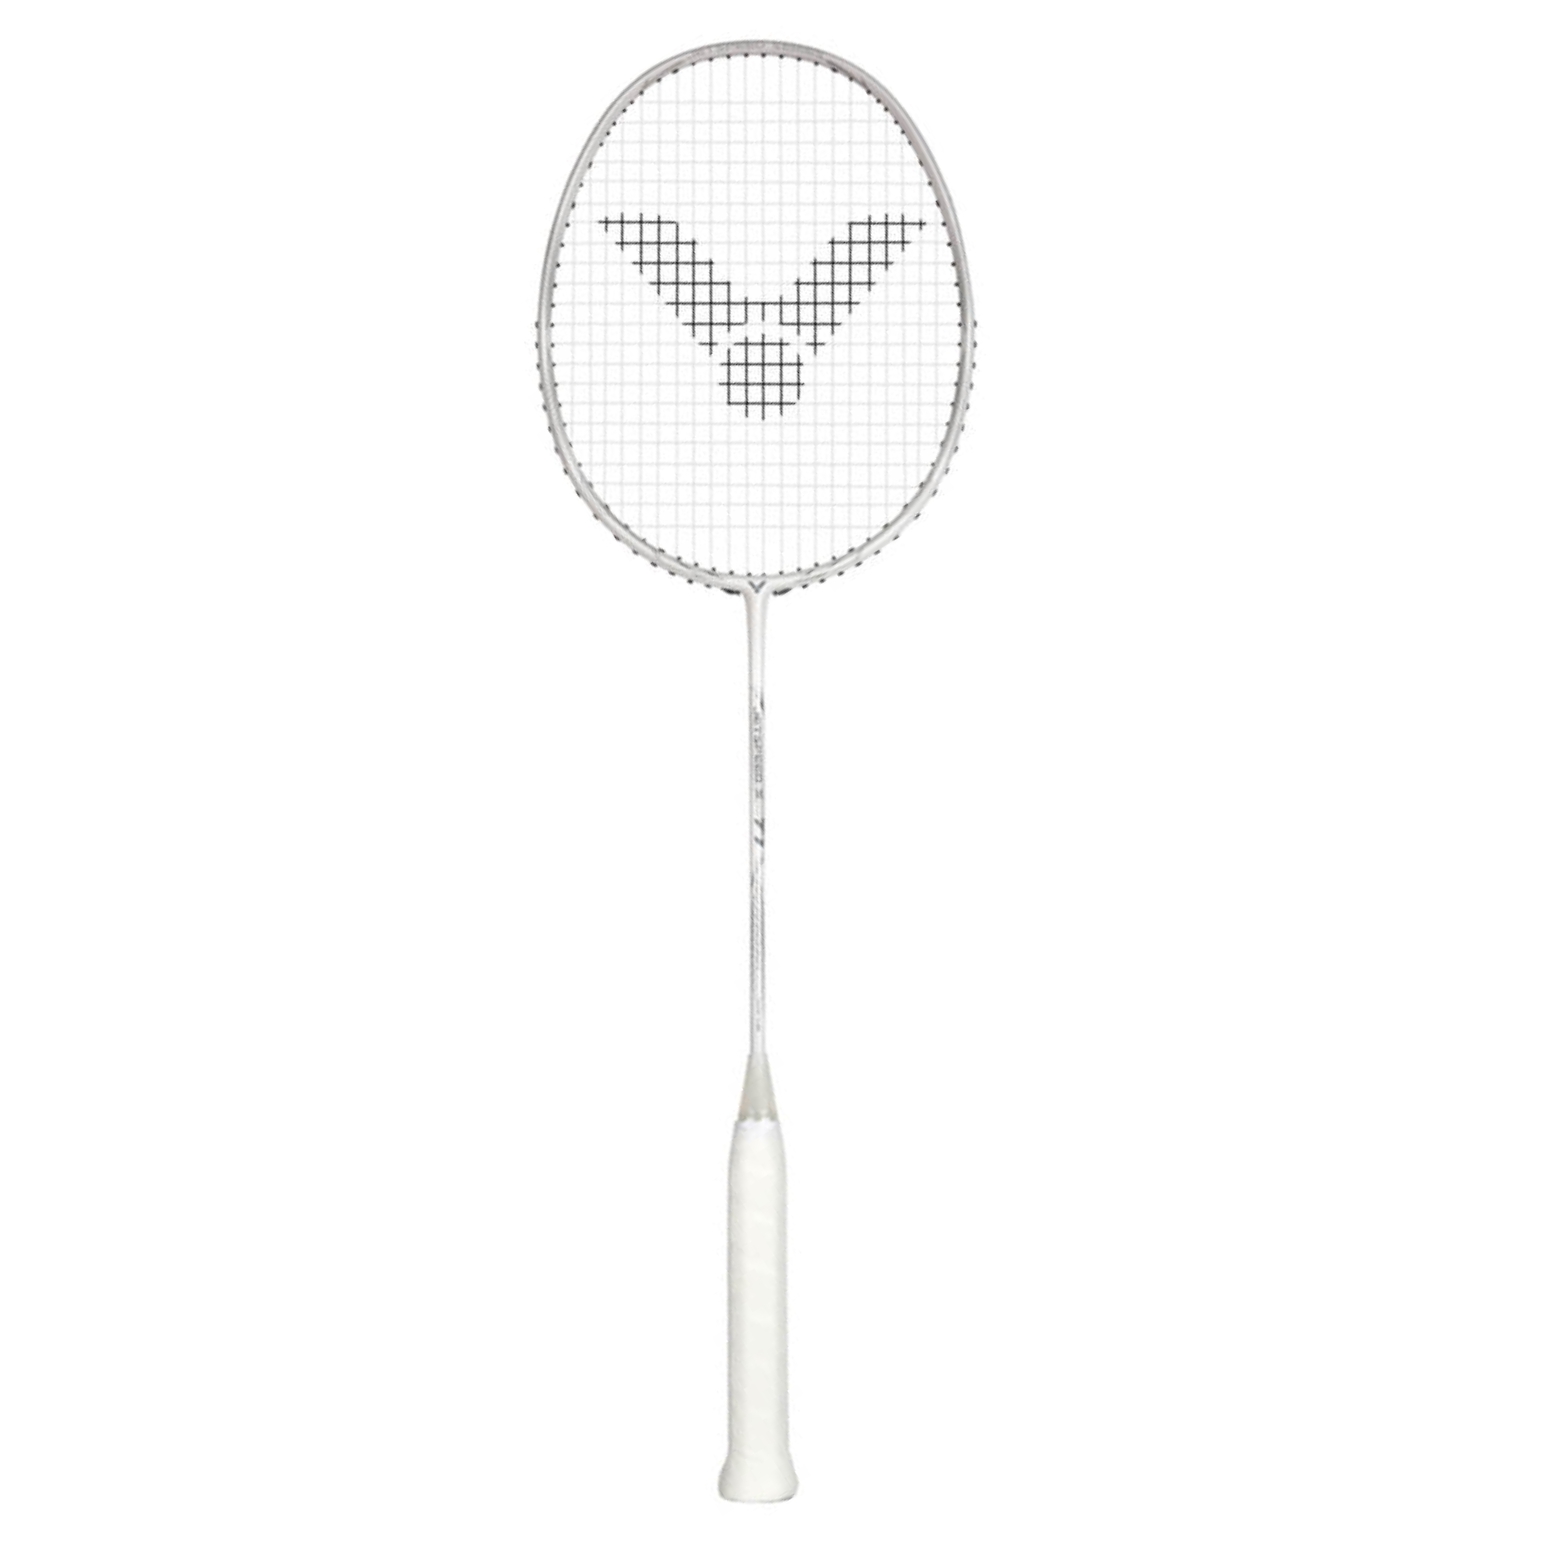 Victor Jetspeed Flexible badminton racket → Low price